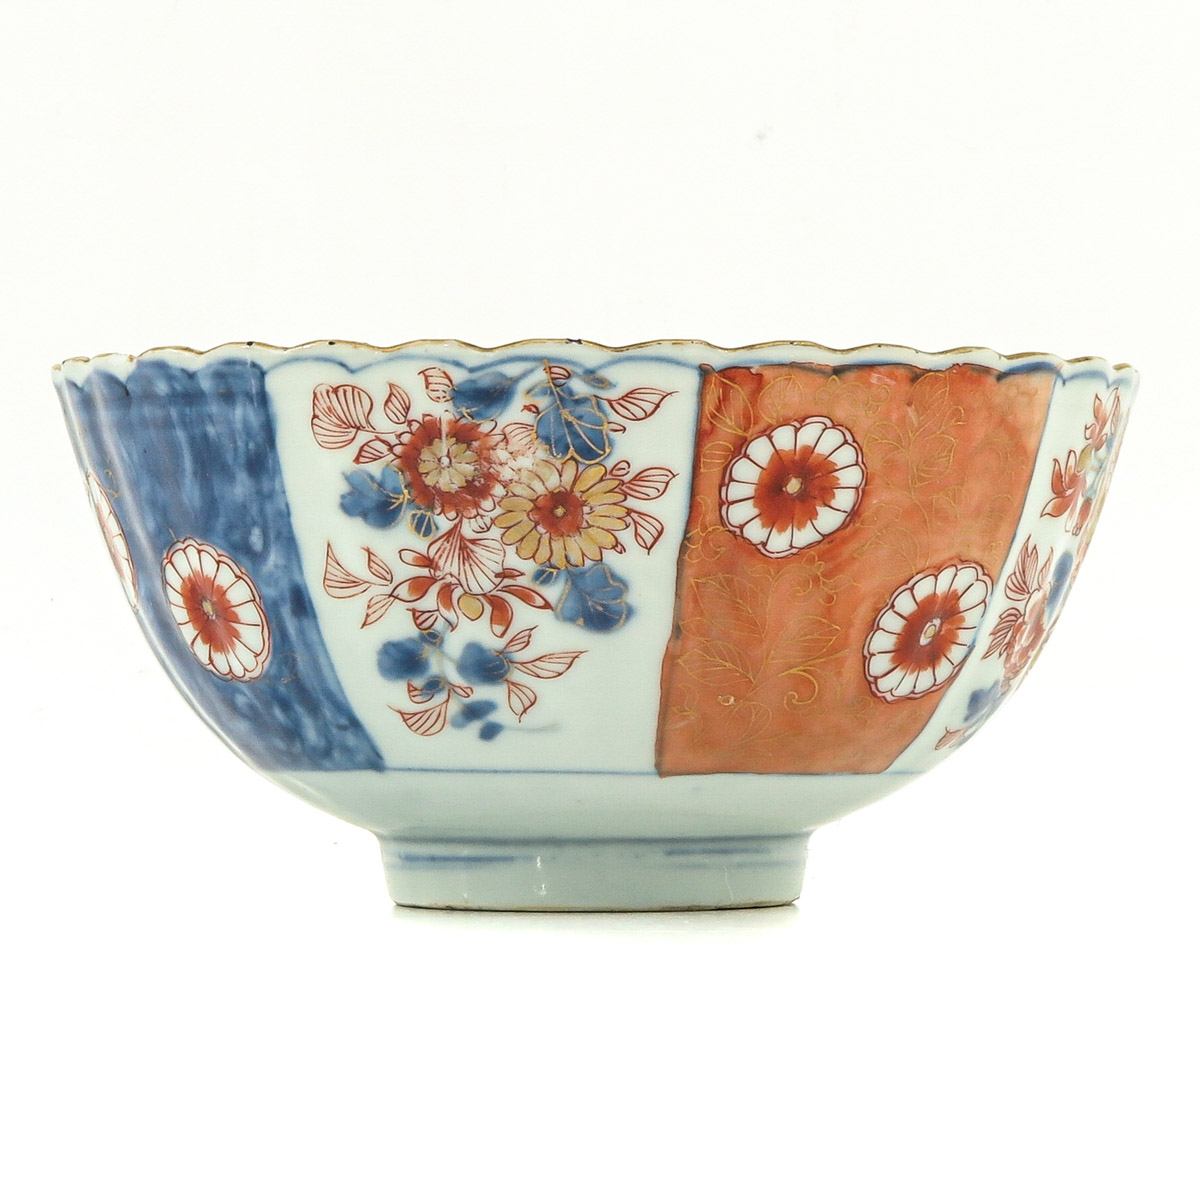 An Imari Bowl - Image 3 of 9